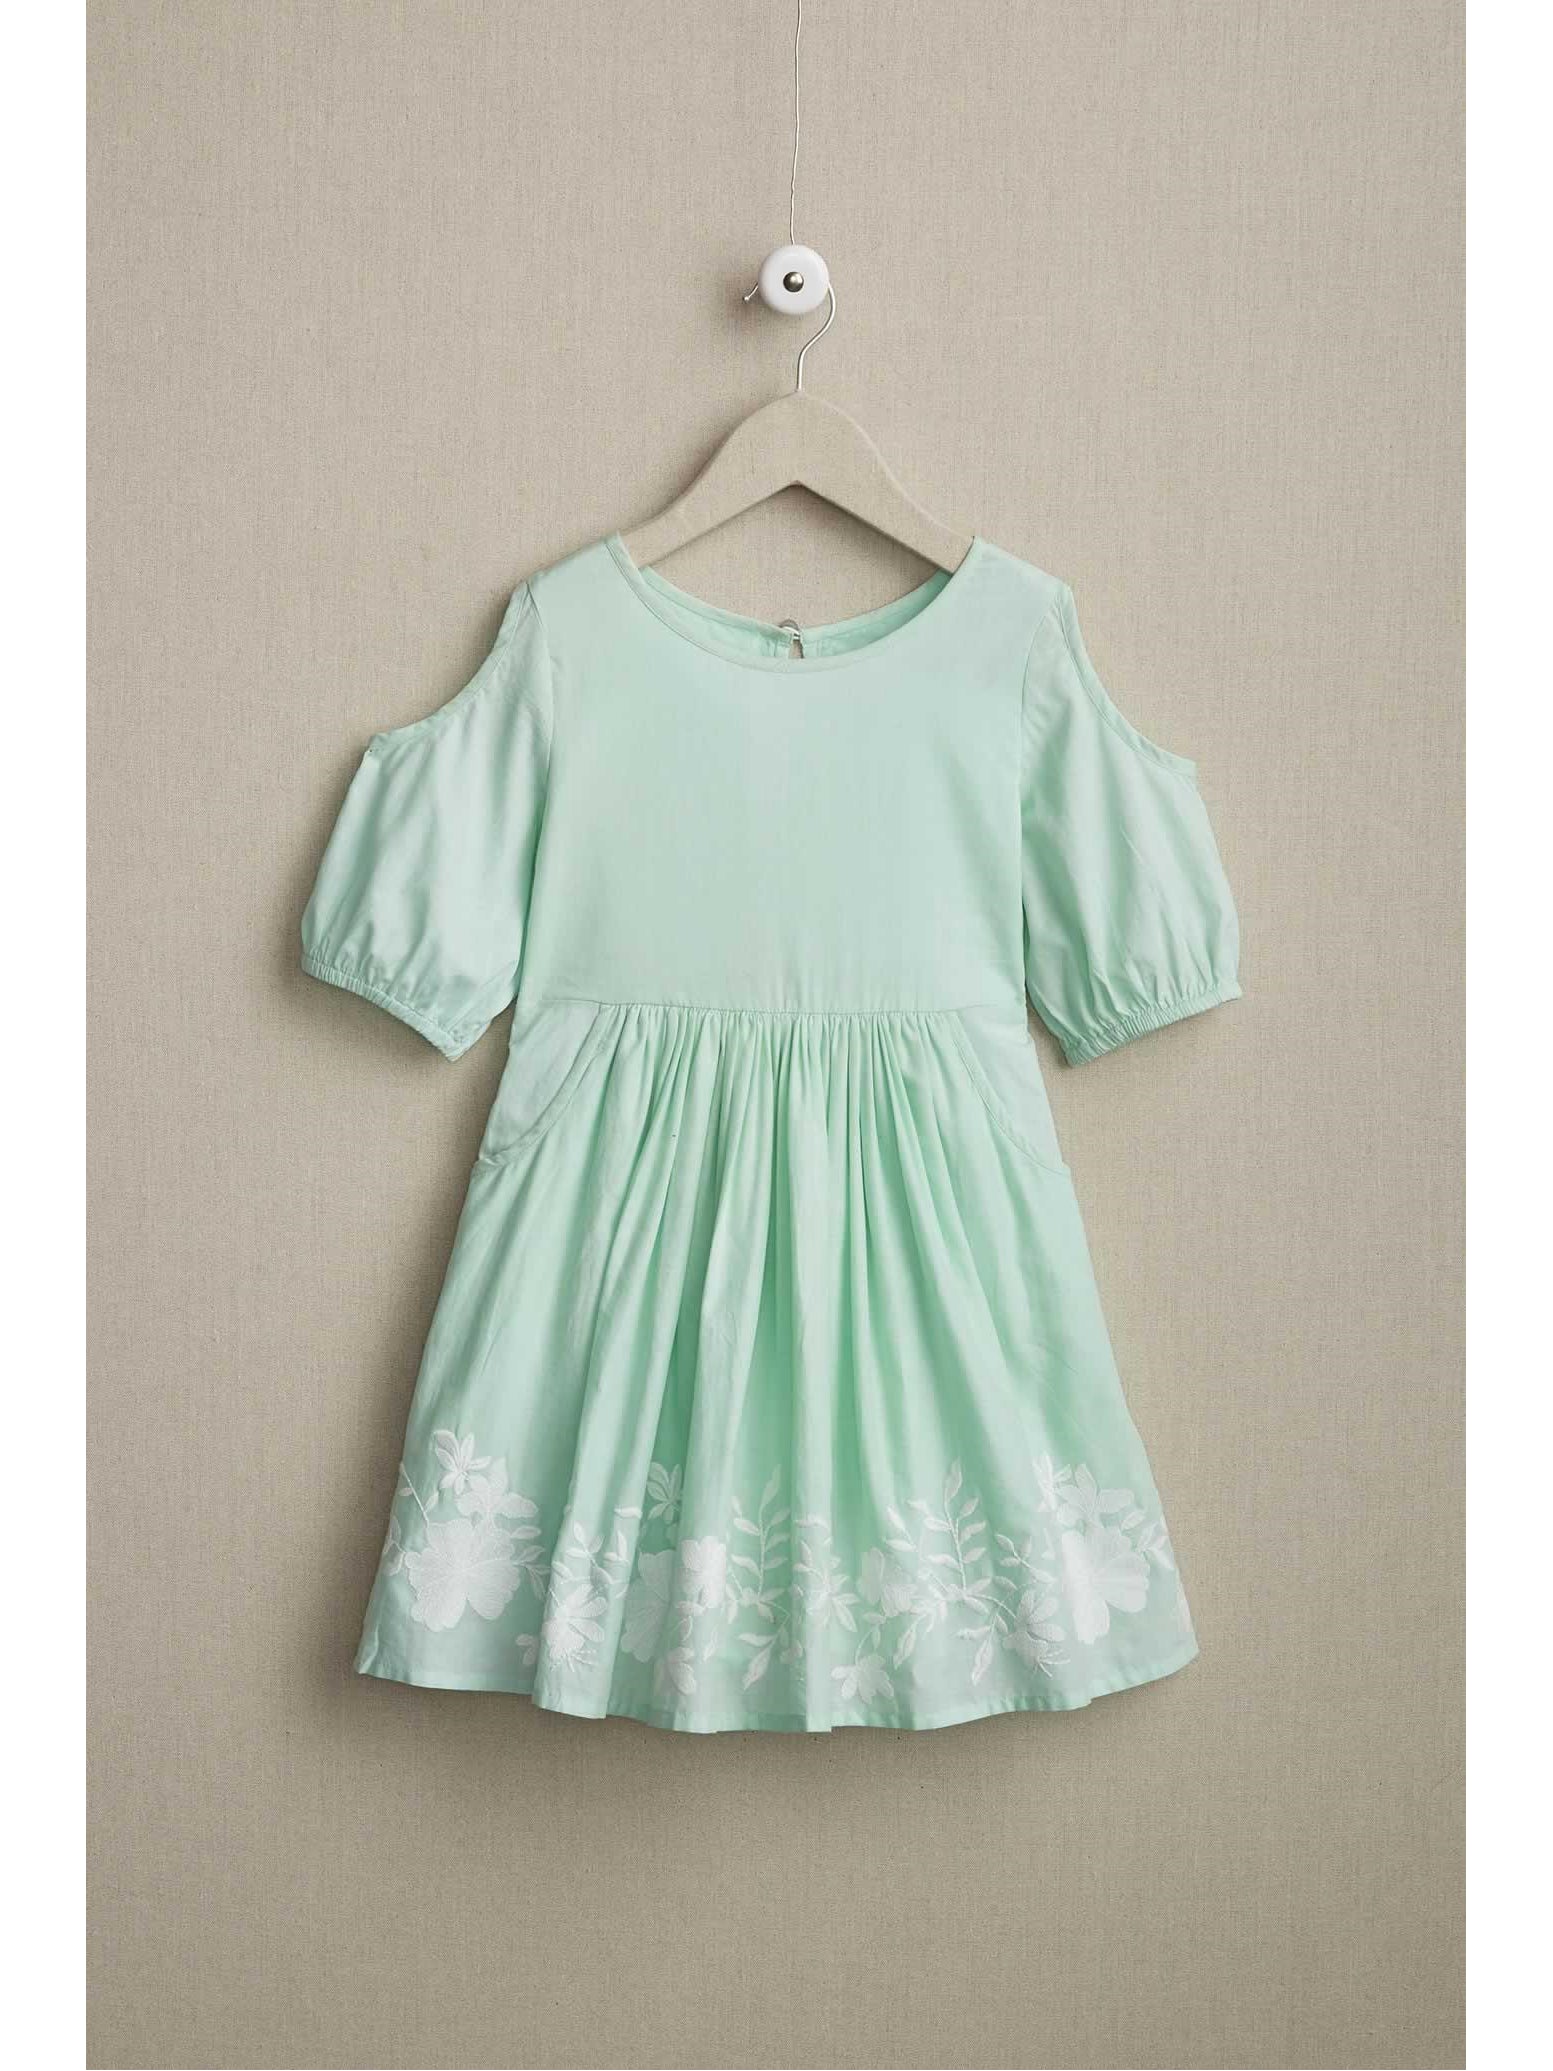 hopscotch dresses for girl baby